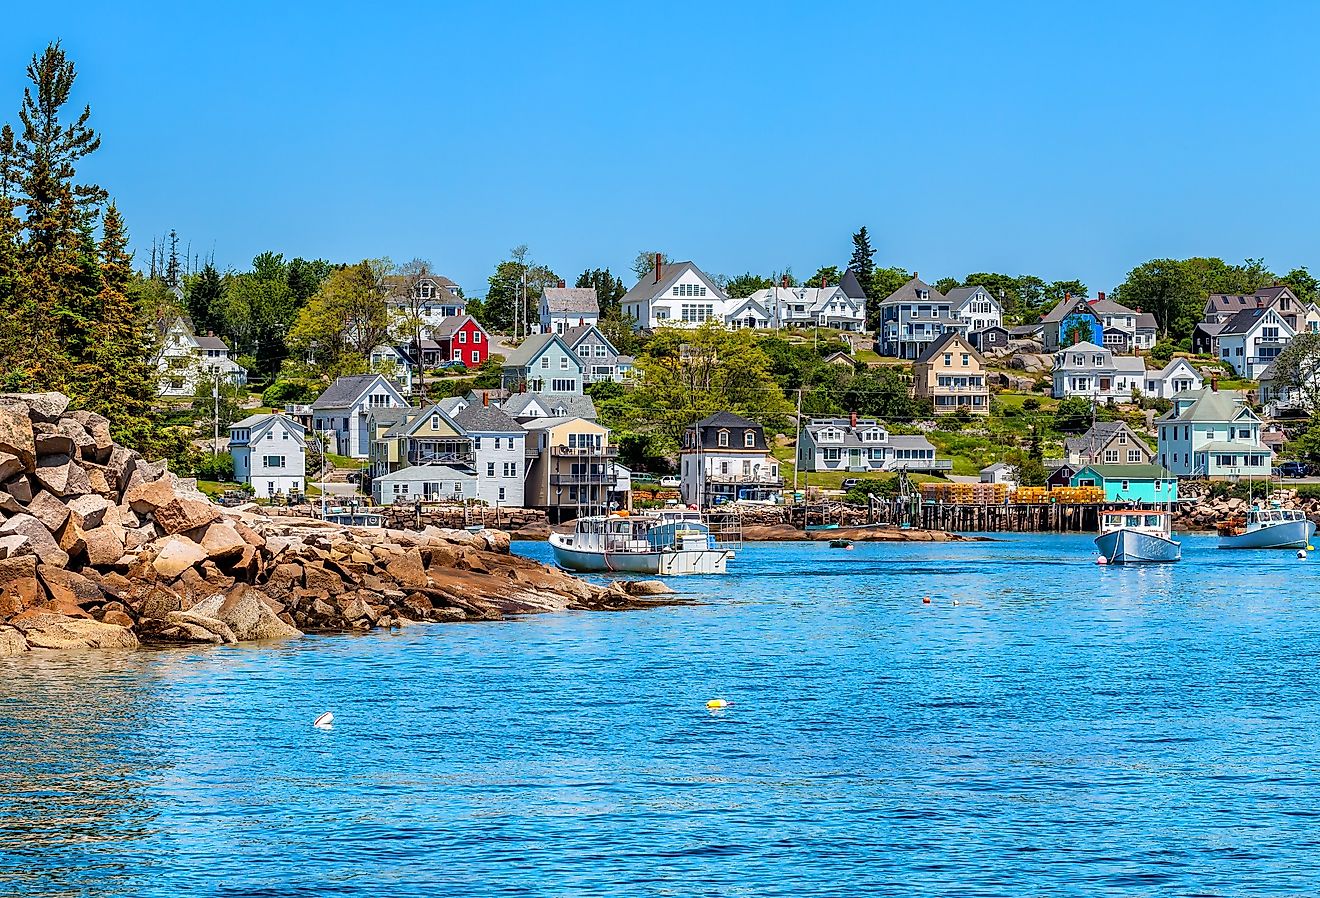 Waterfront and Harbor, Stonington, Maine.